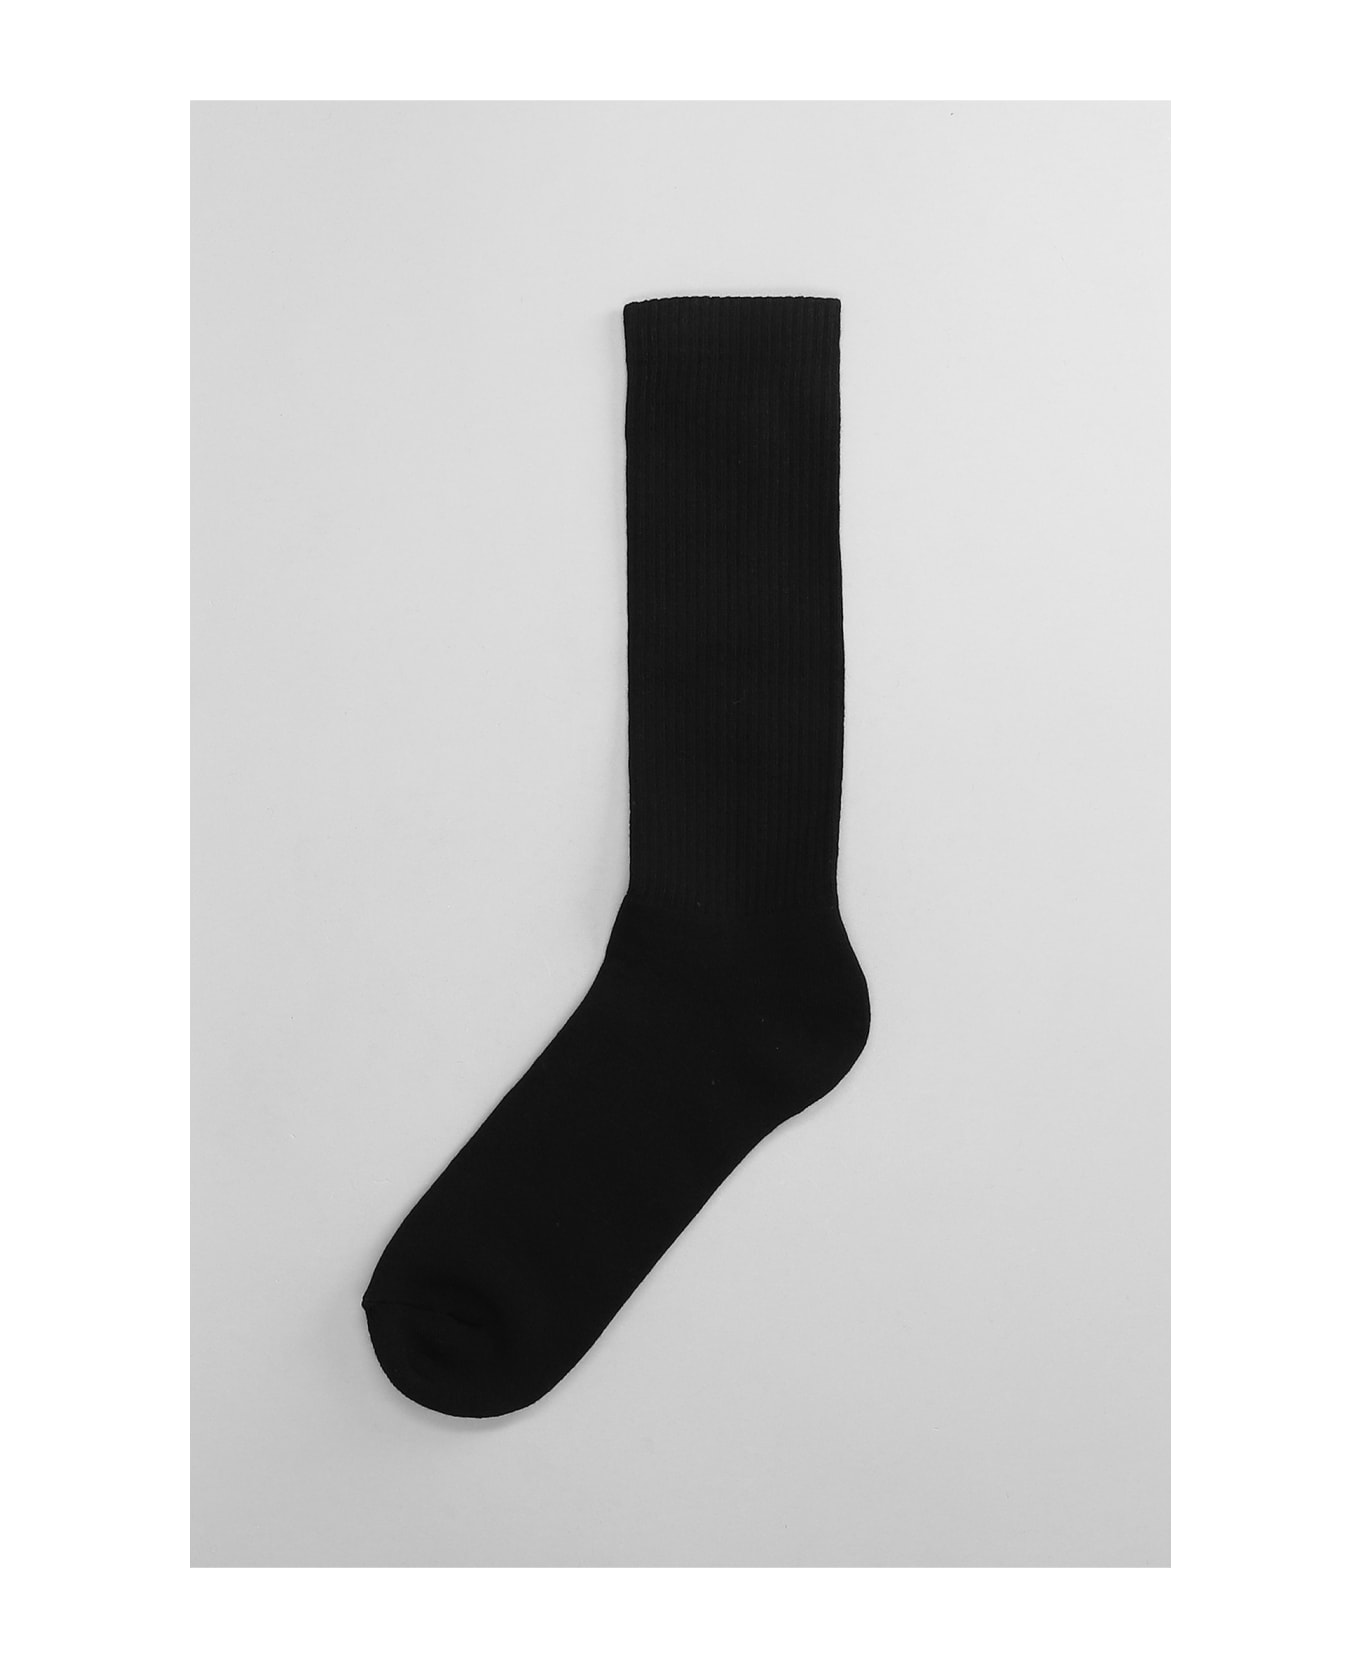 Palm Angels Classic Logo Socks - Black White 靴下